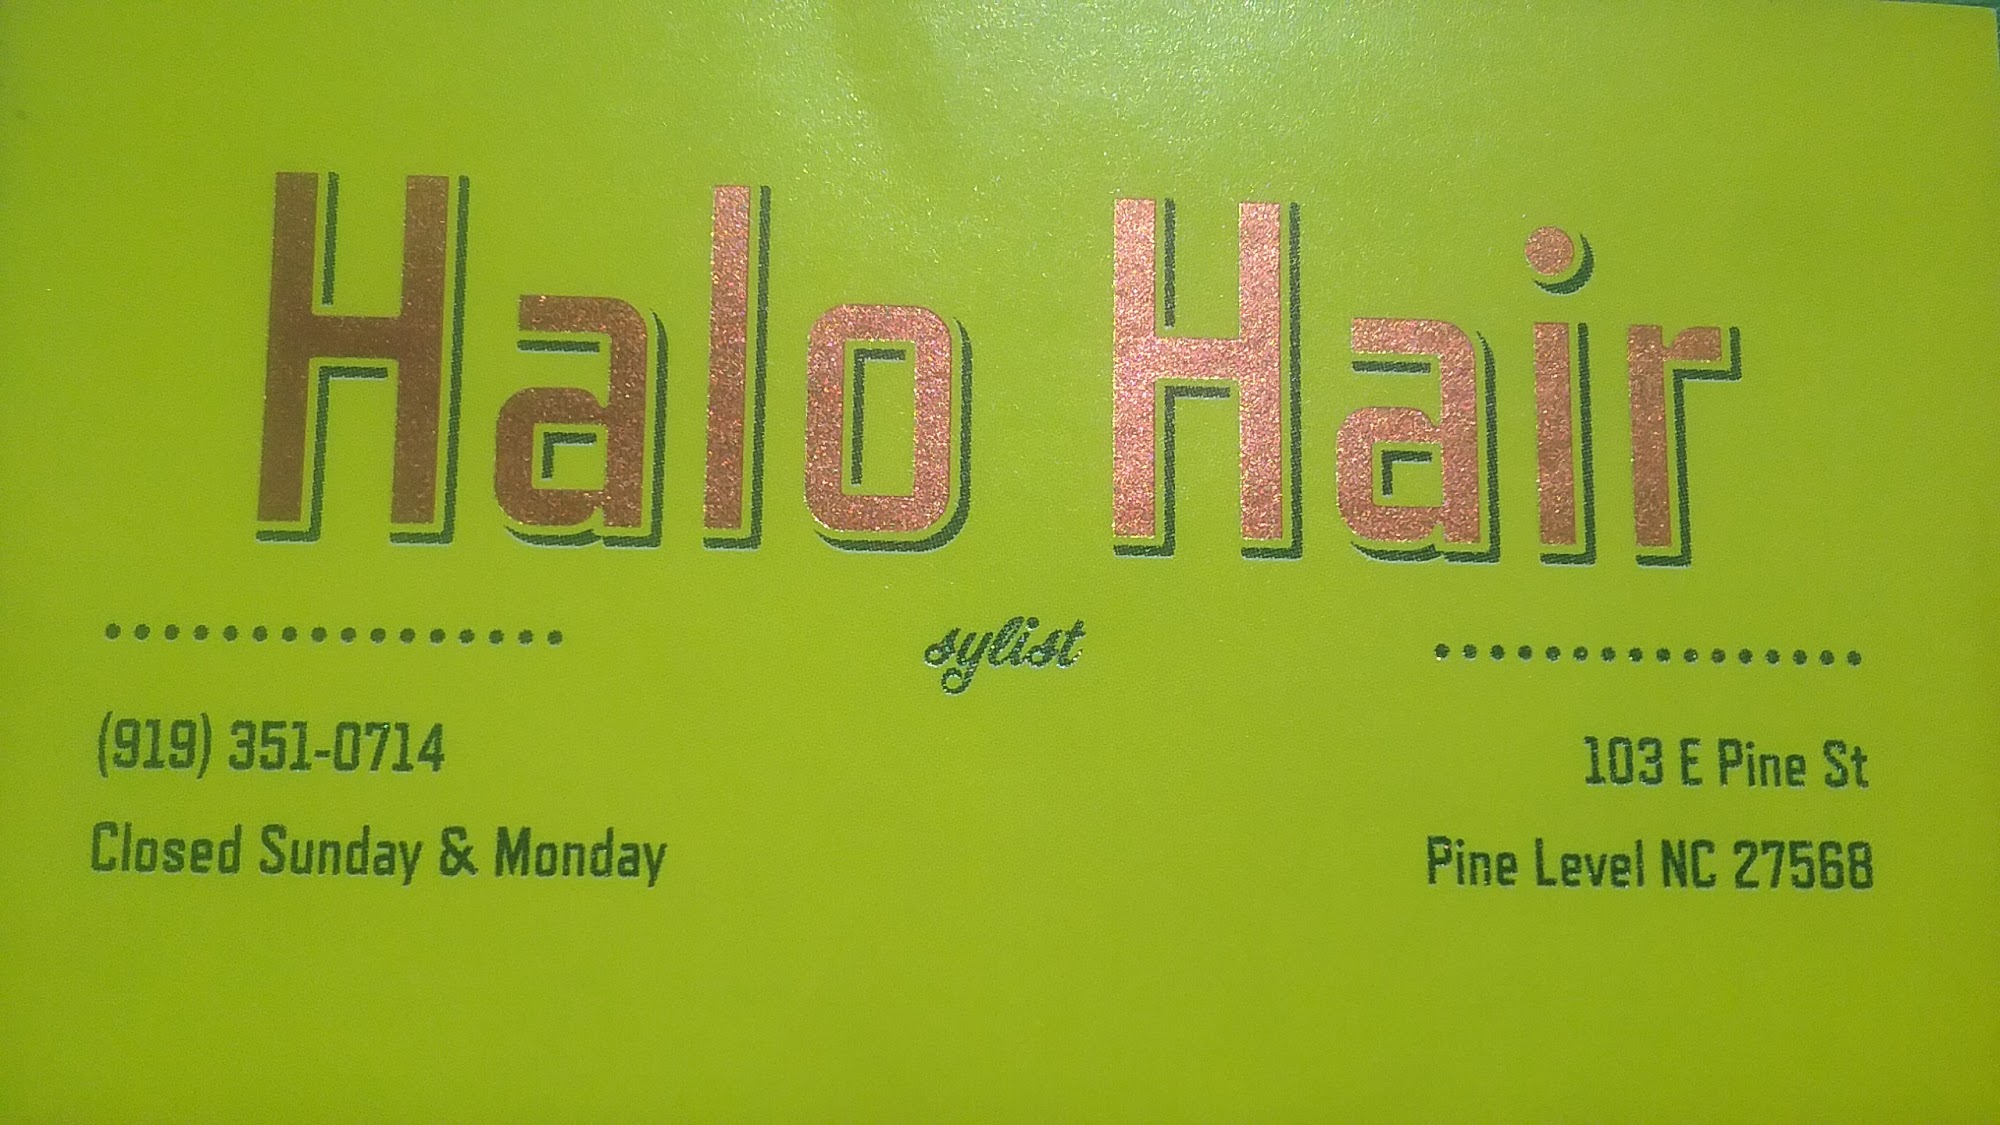 Halo Hair